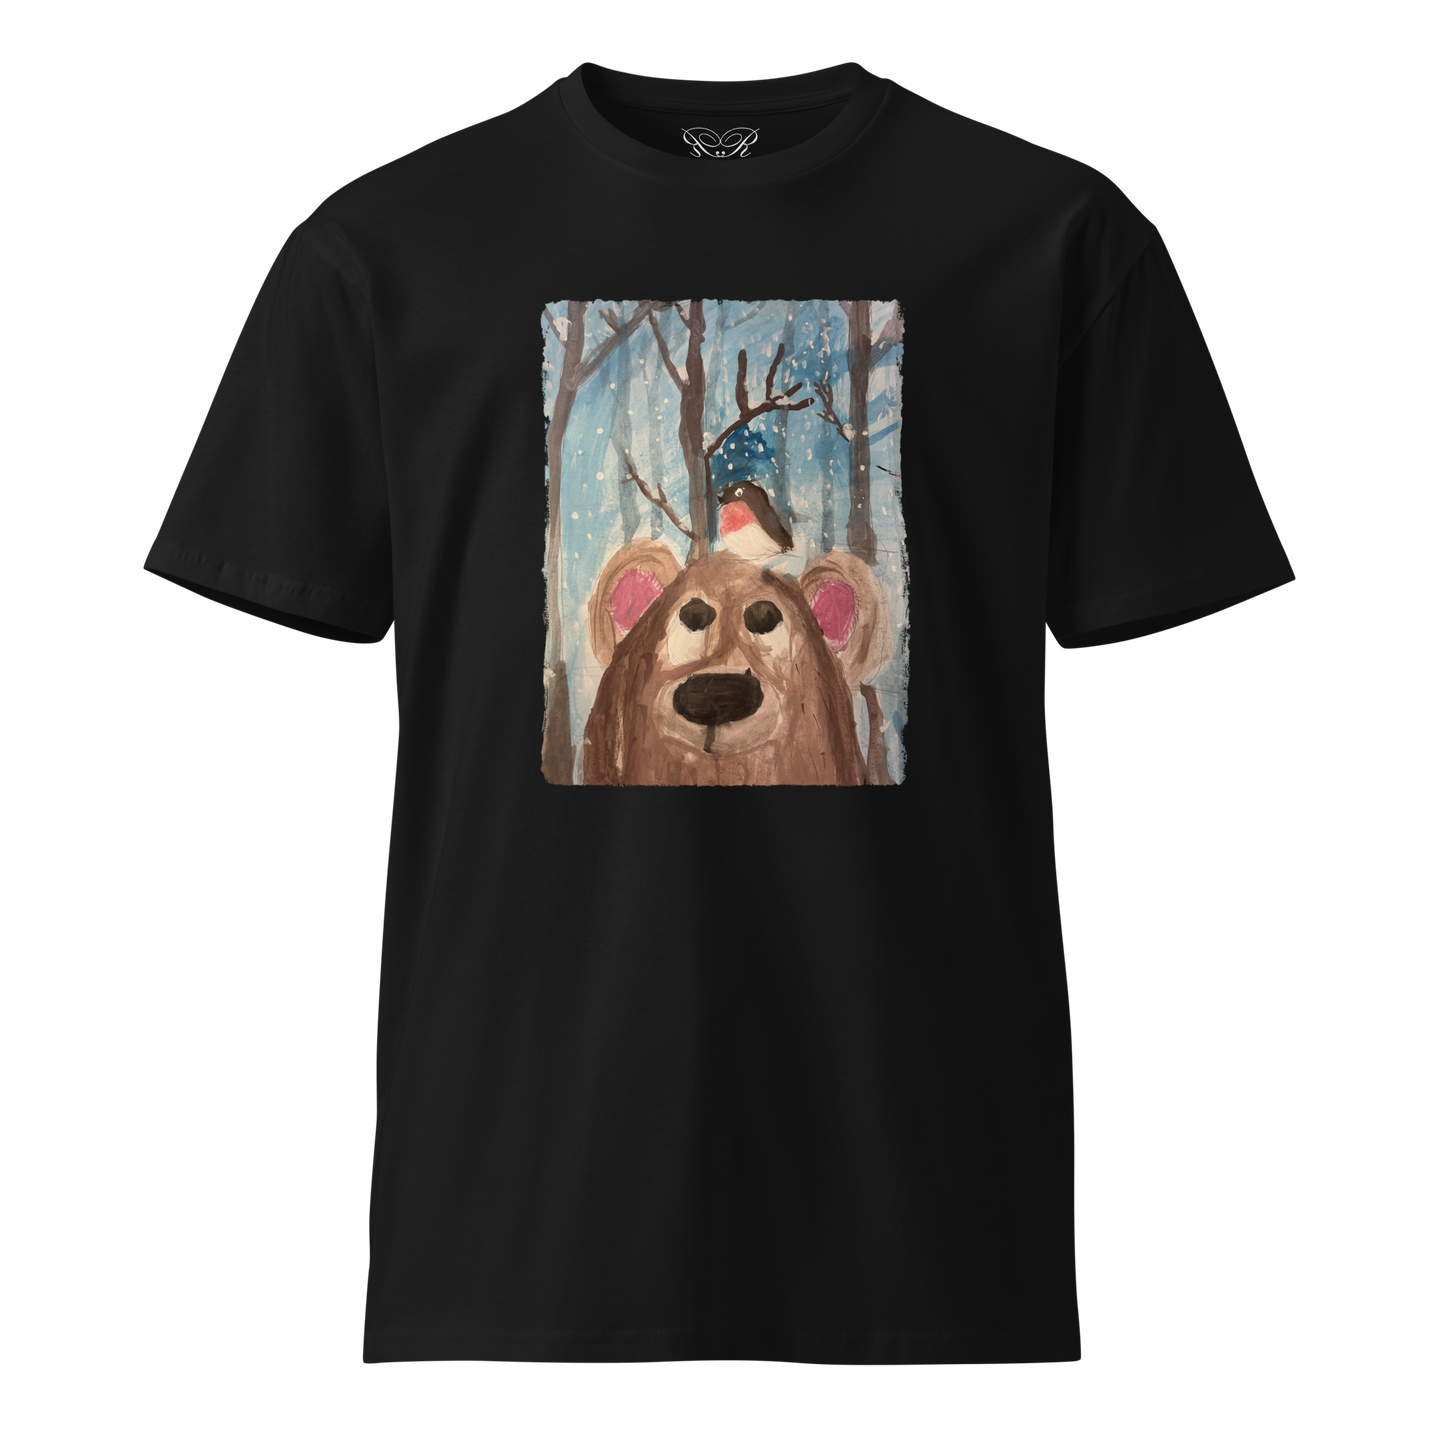 Unisex premium t-shirt "Bear"